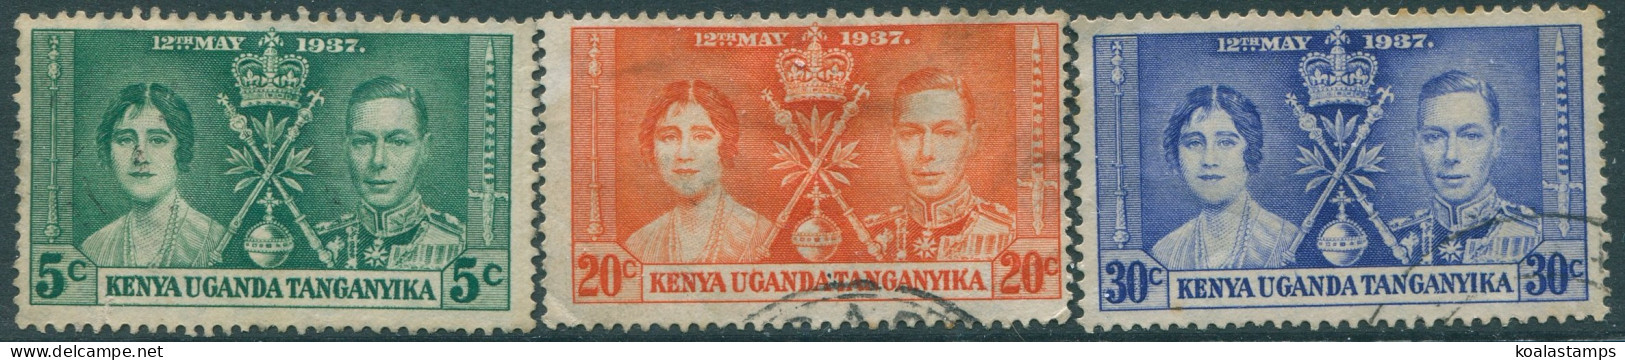 Kenya Uganda And Tanganyika 1937 SG128-130 KGVI Coronation Set FU (amd) - Kenya, Ouganda & Tanganyika